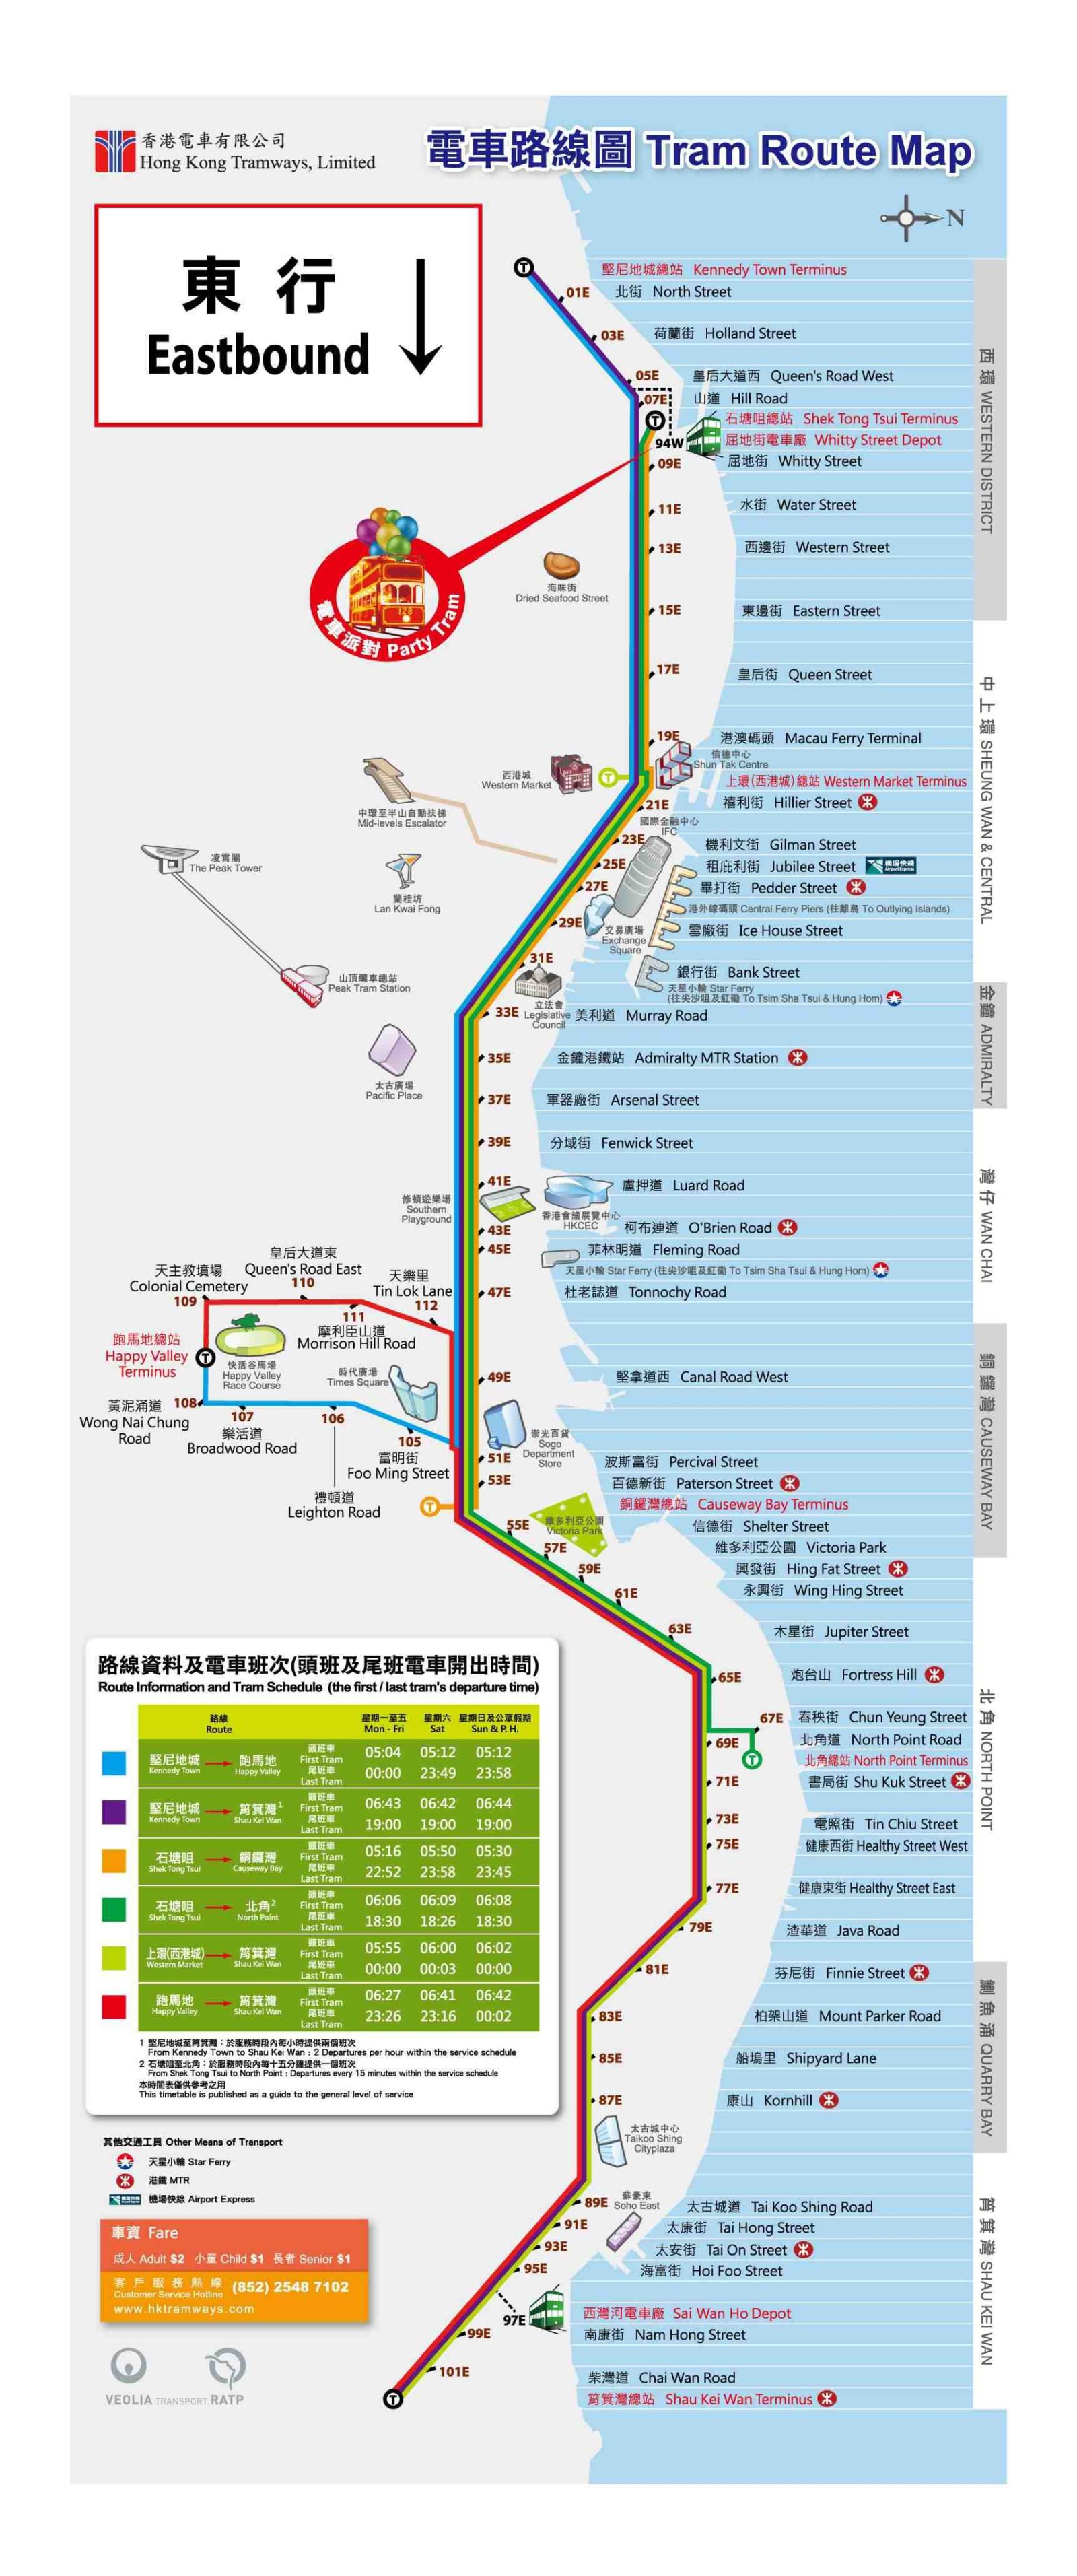 Hong Kong Mtr Map 2012 2013 Printable Hk And Kowloon Subway And Other